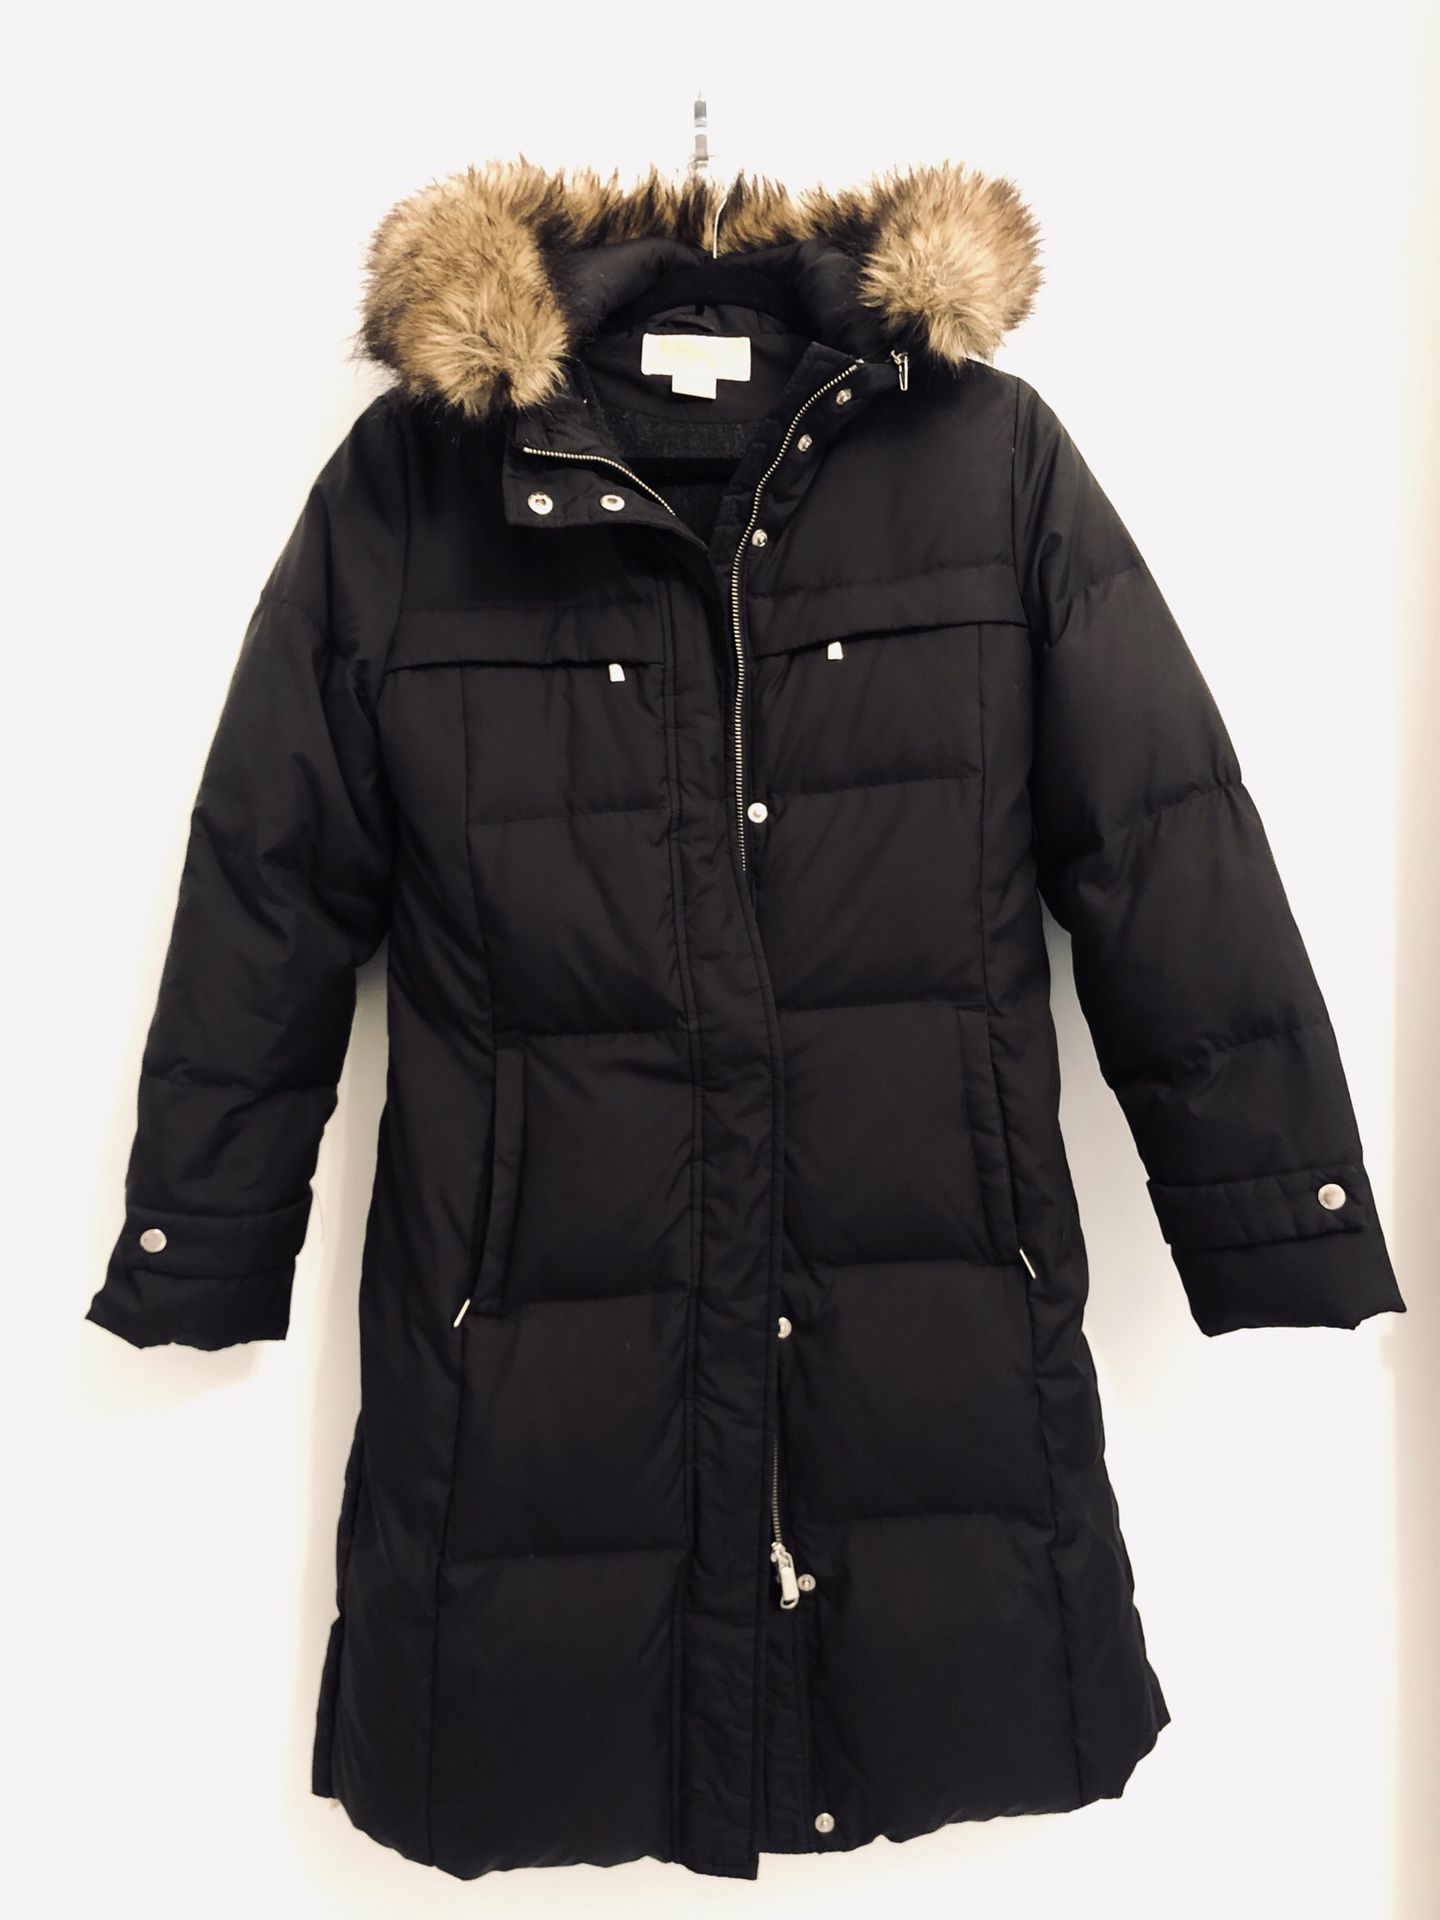 Michael Kors Parka Jacket/ Snowsuit in black